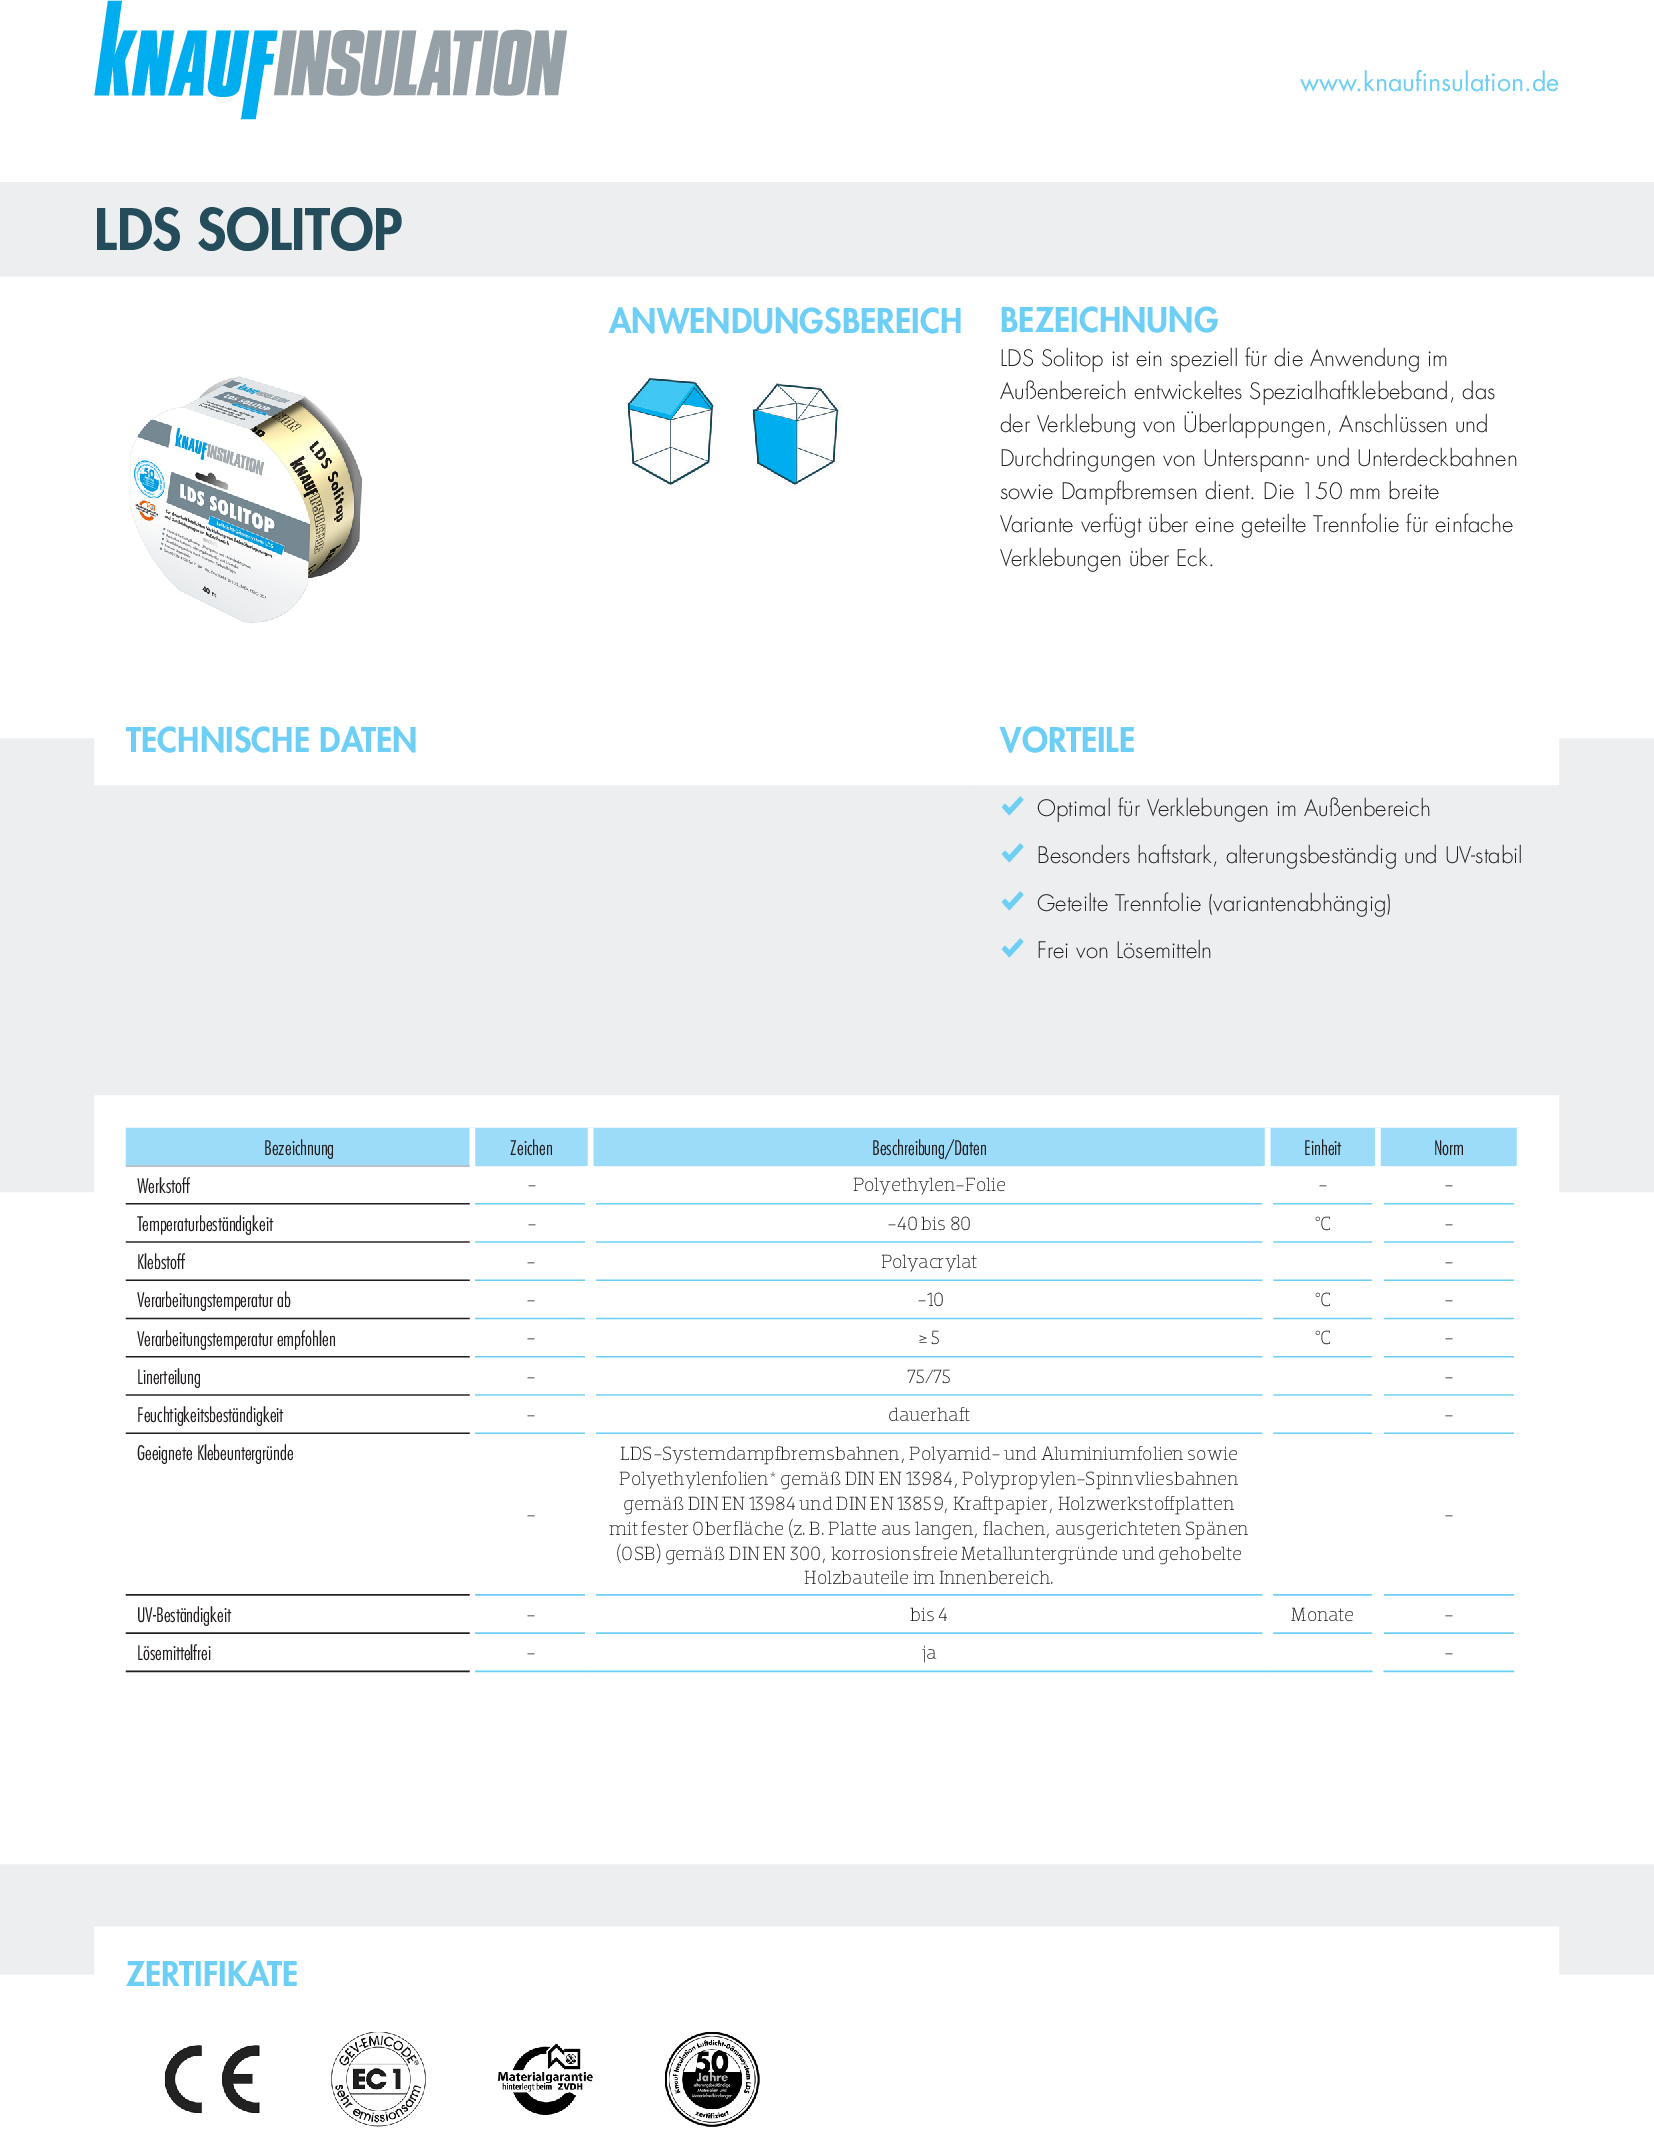 Datenblatt Knauf Insulation LDS Solitop